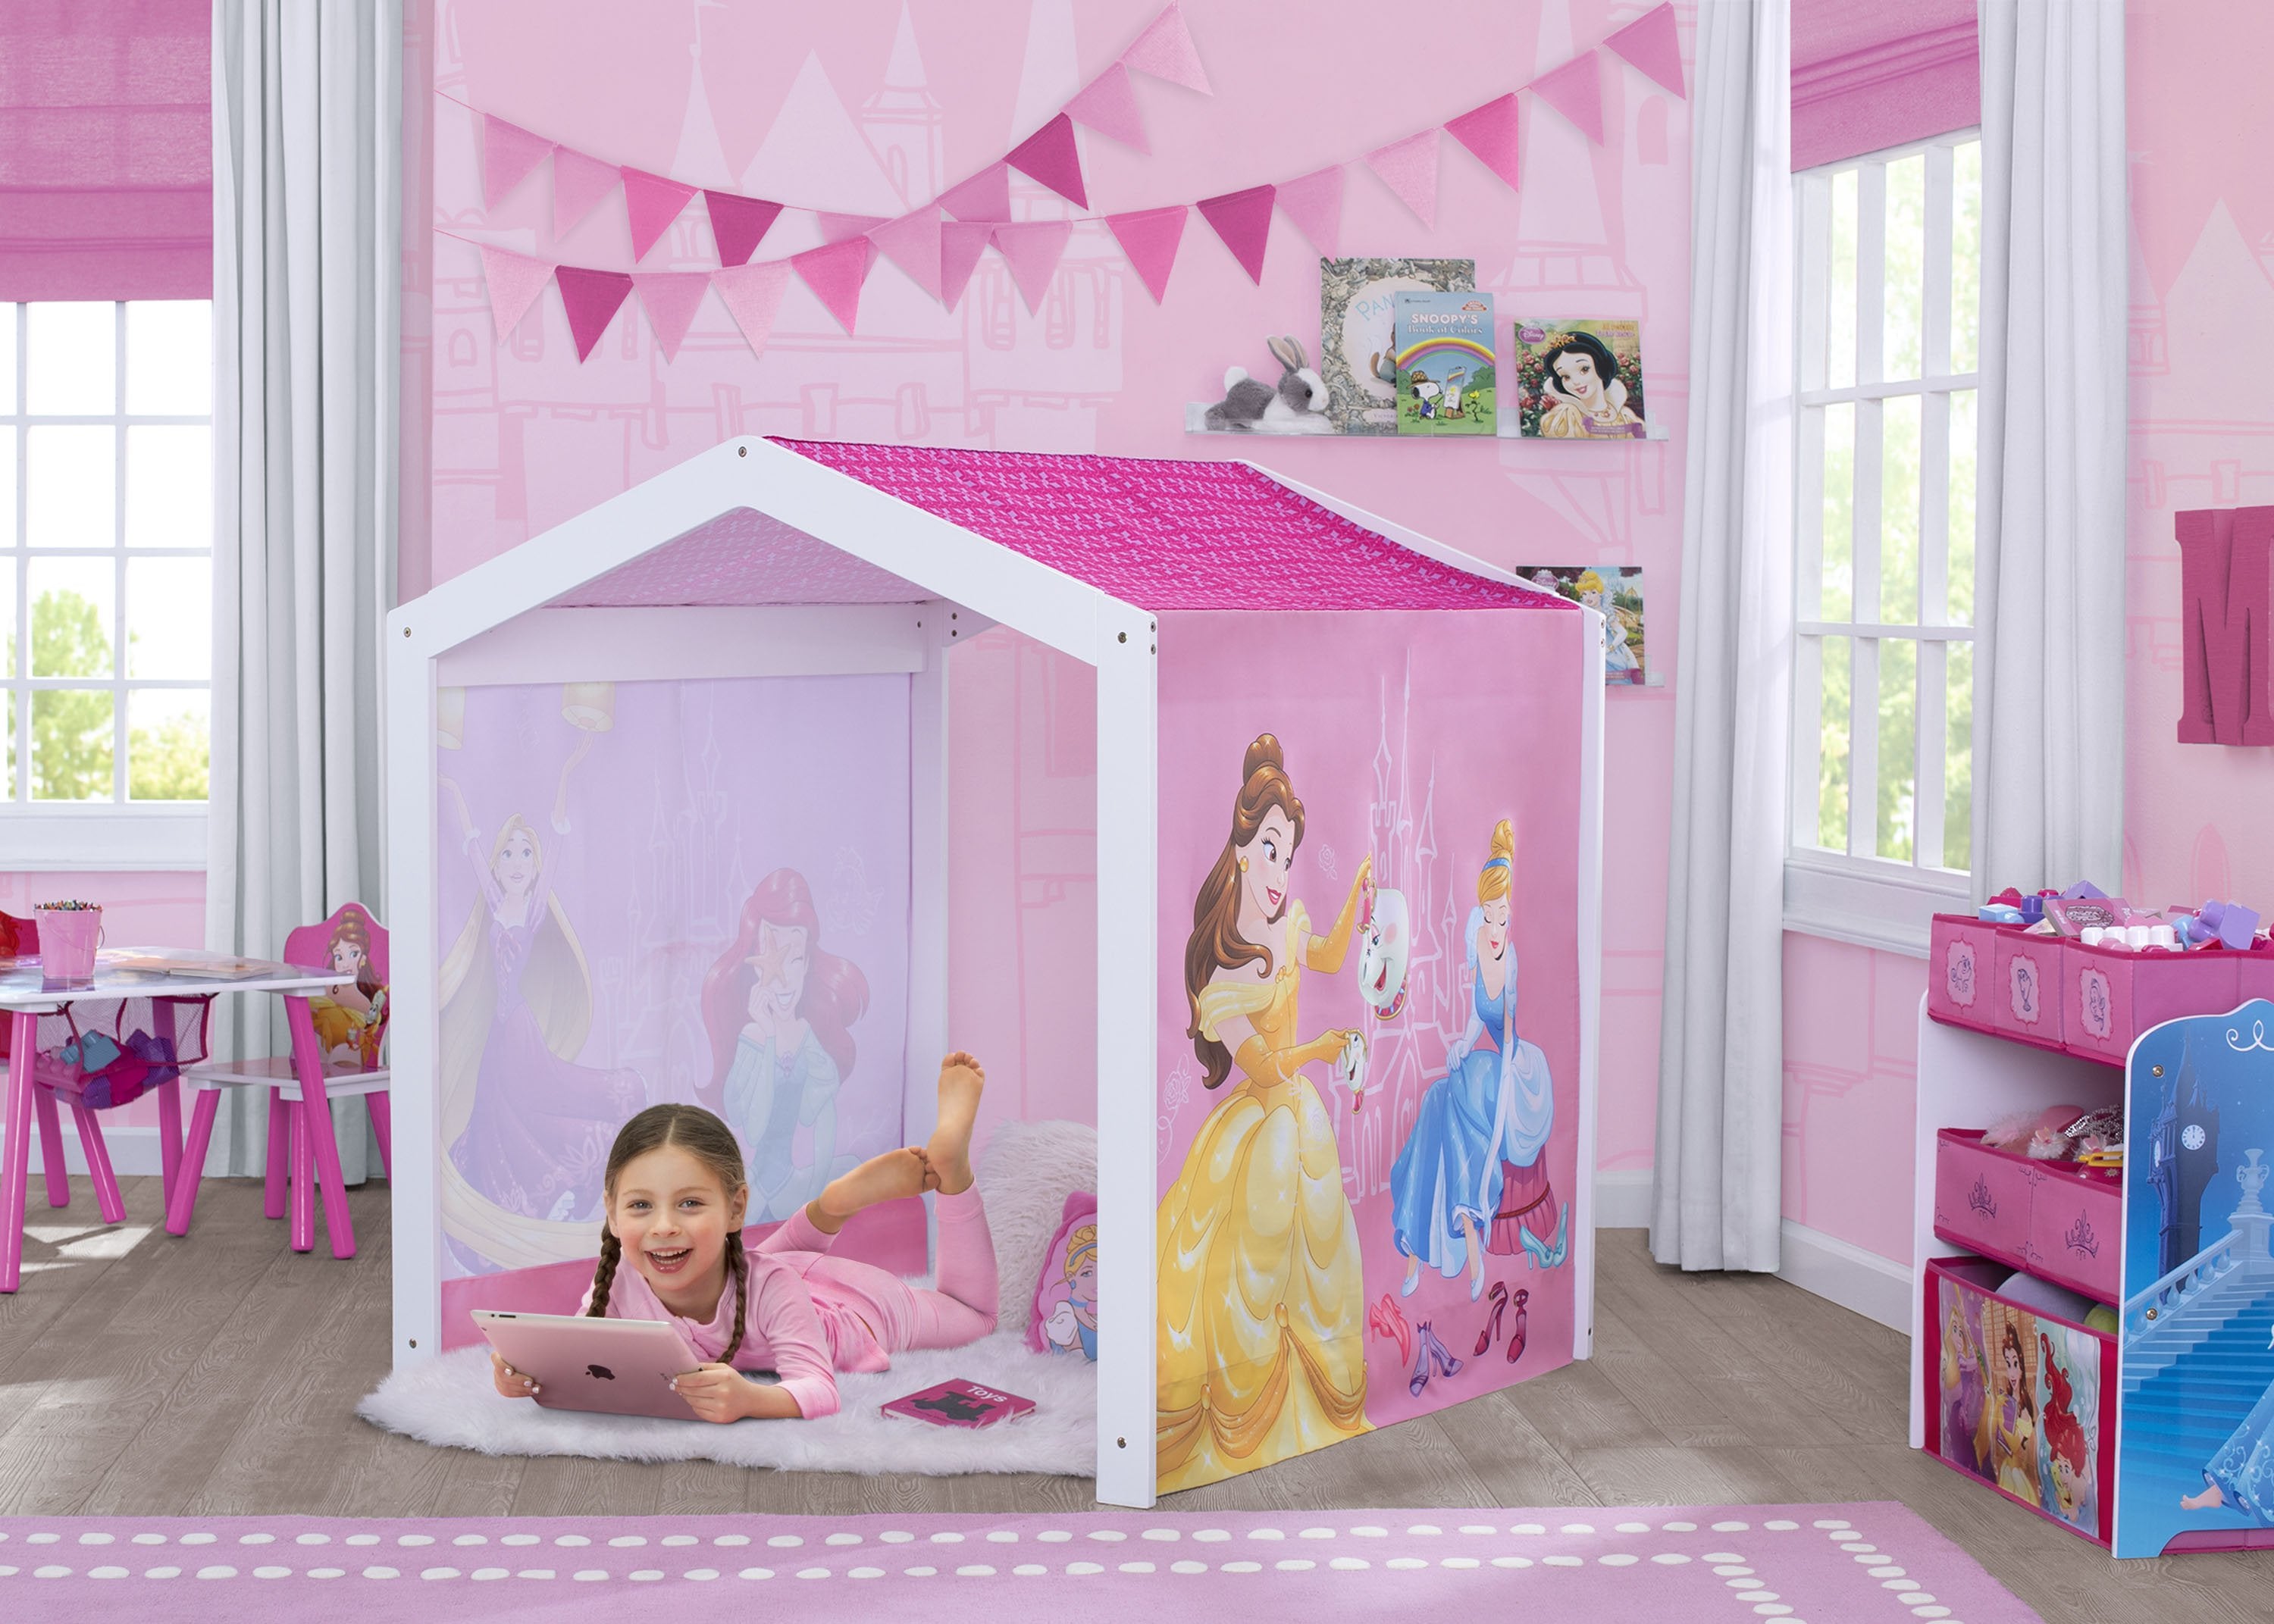 Kids' Rug, Princess Castle Play mat for Girls' Room Décor 59“ x 39